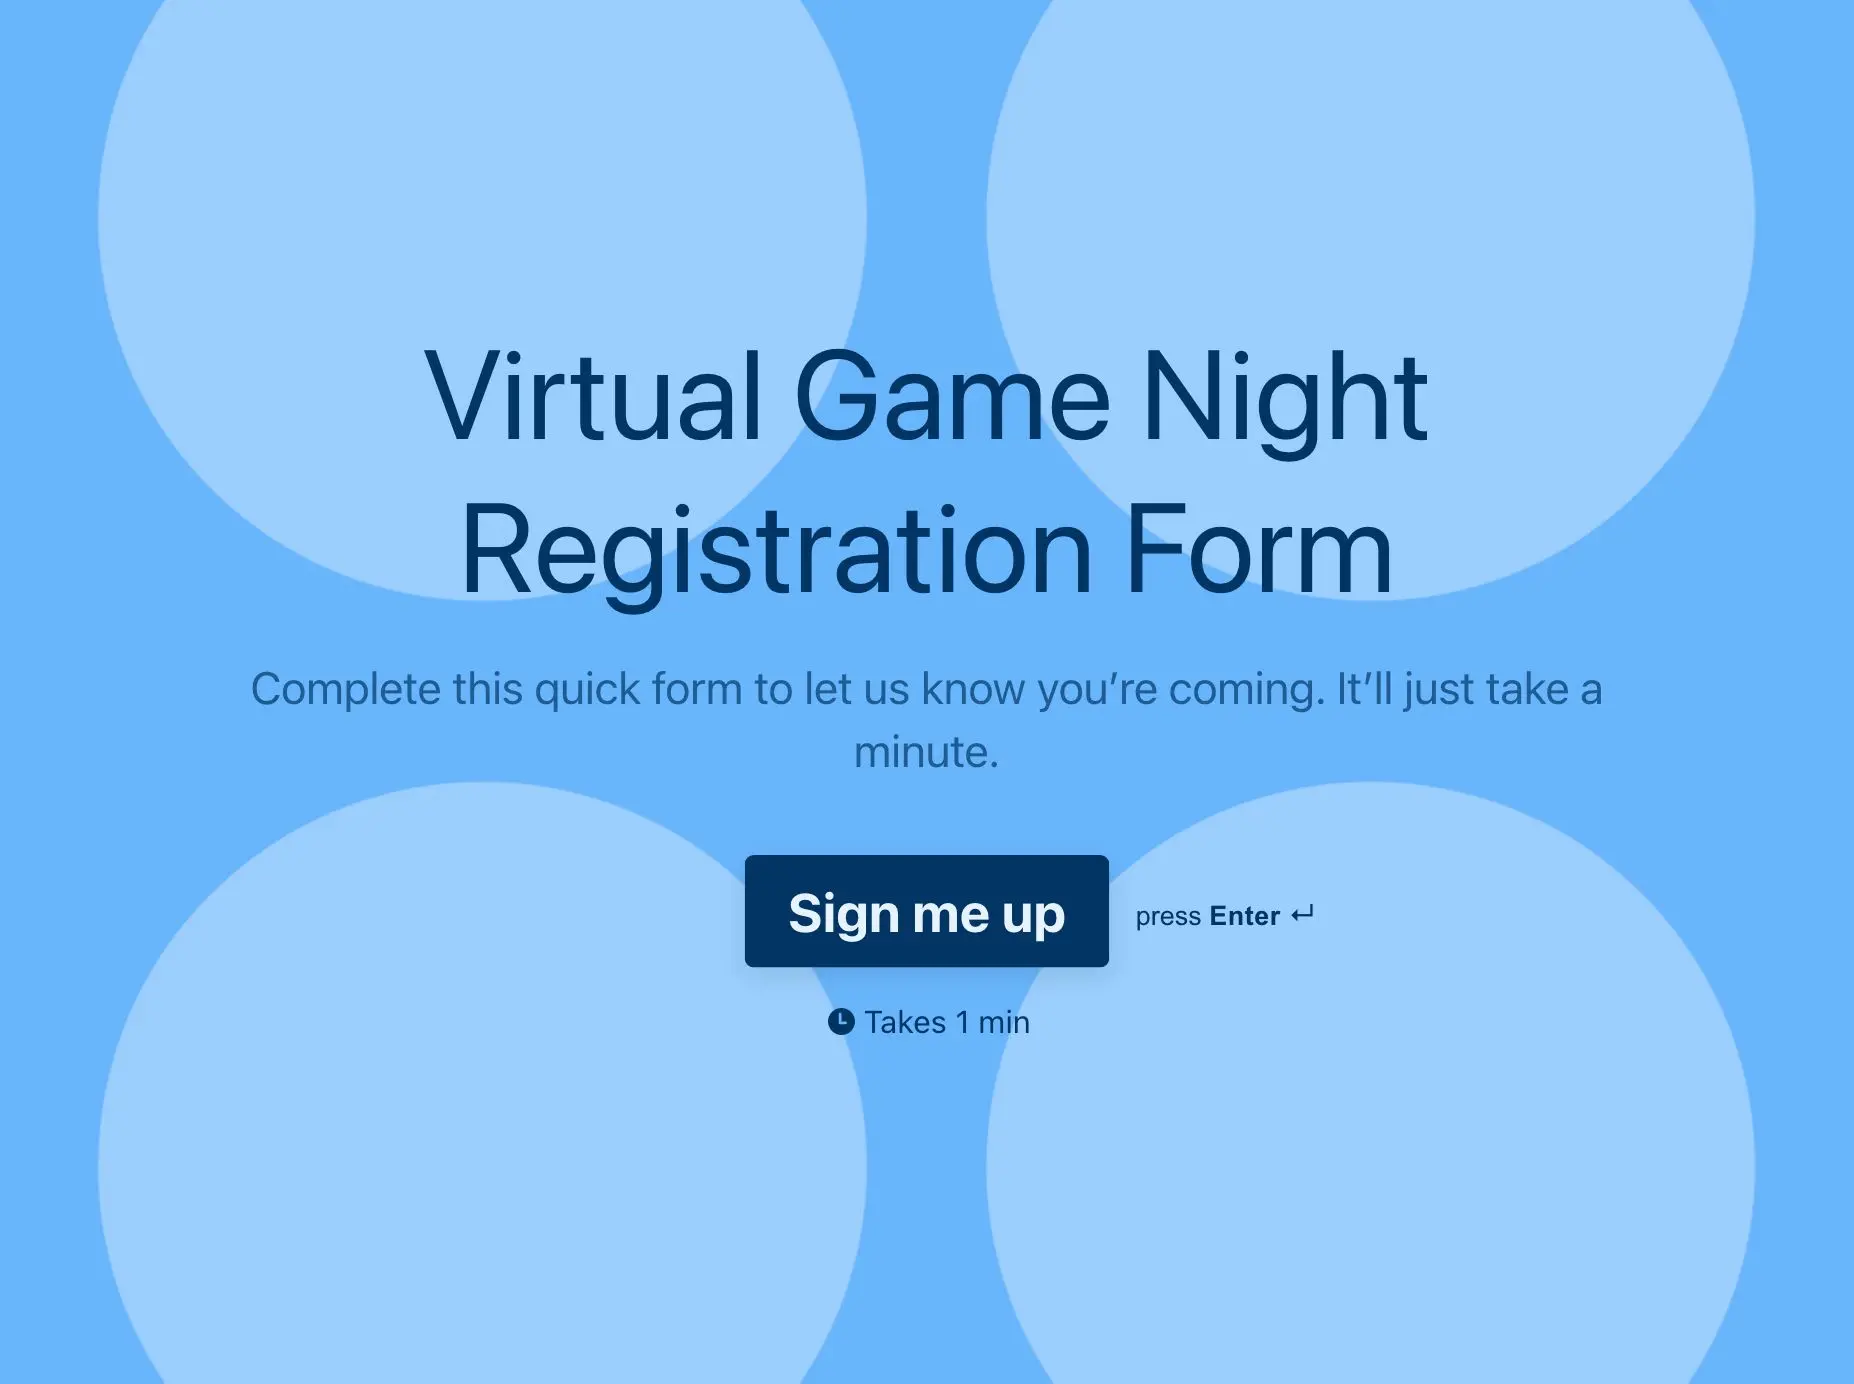 Virtual Game Night Registration Form Template Hero